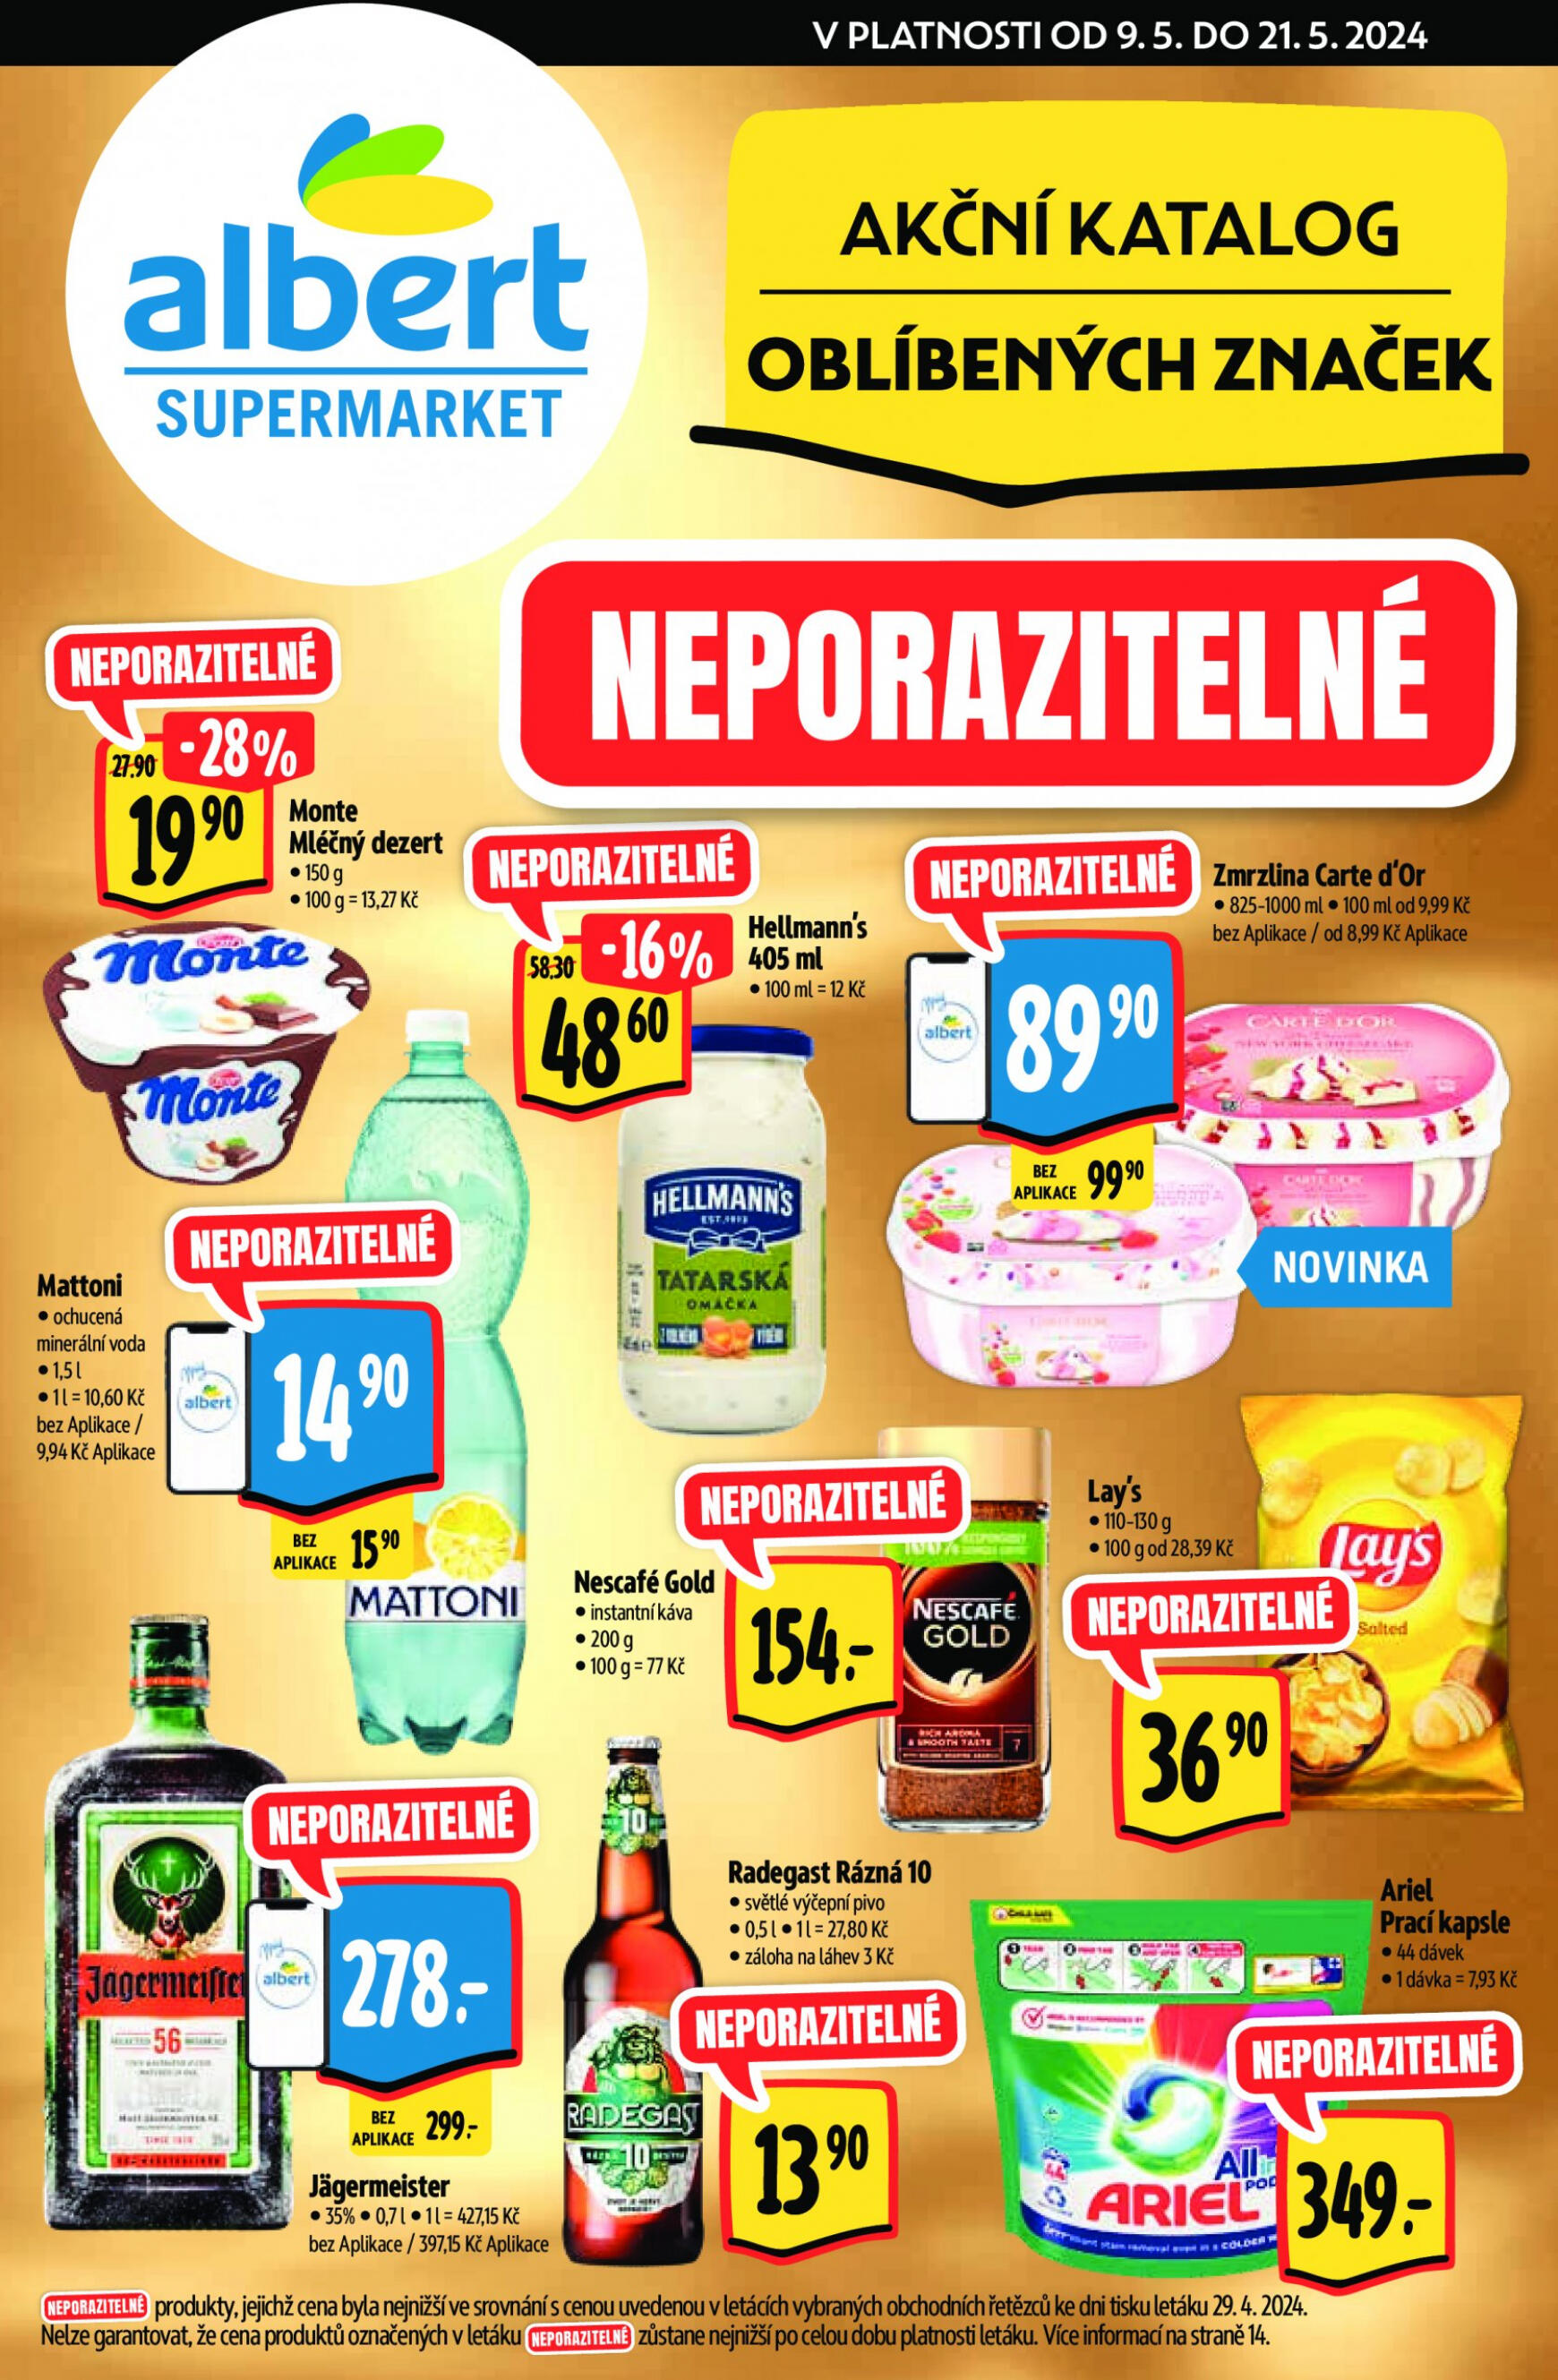 albert - Leták Albert Supermarket - Katalog oblíbených značek aktuální 09.05. - 21.05.